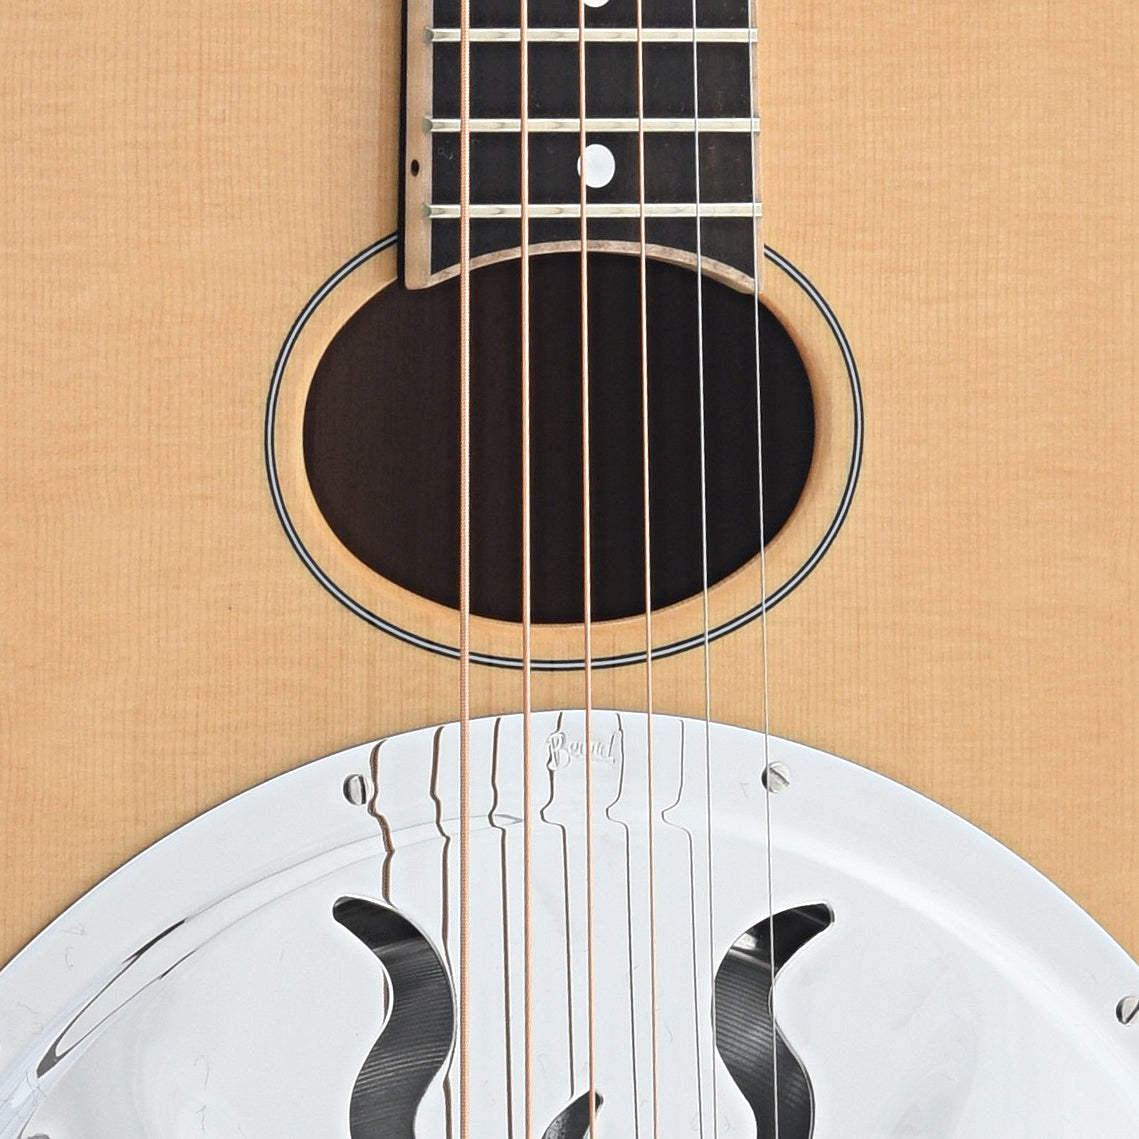 Image 6 of Beard Odyssey A-Model Mahogany & Case, Natural Finish - SKU# ODY3A : Product Type Resonator & Hawaiian Guitars : Elderly Instruments